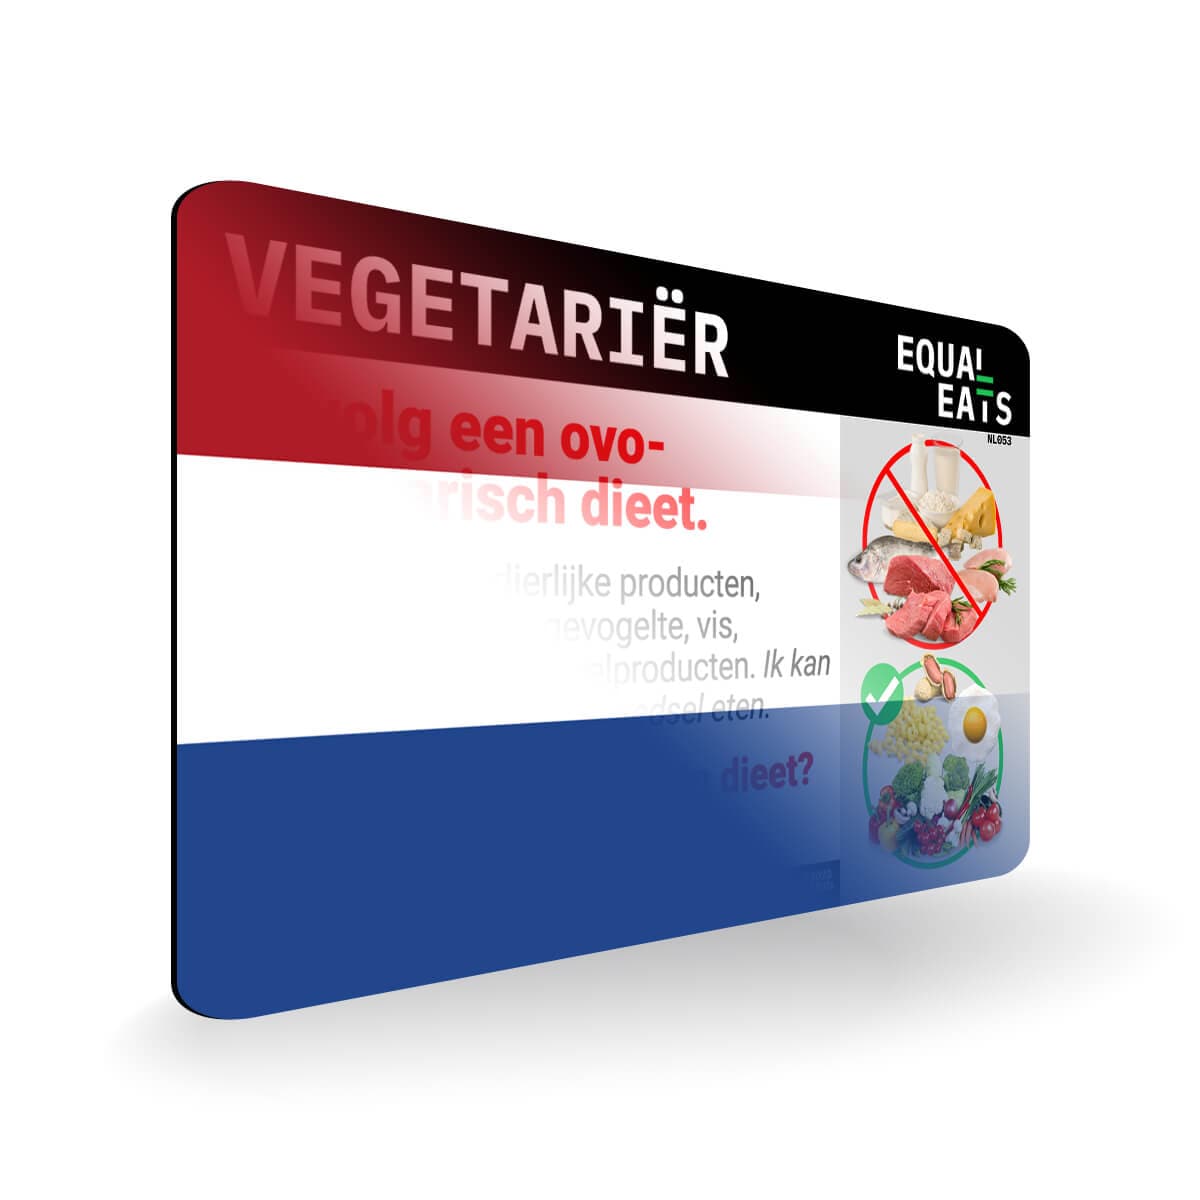 Ovo Vegetarian in Dutch. Card for Vegetarian in Netherlands